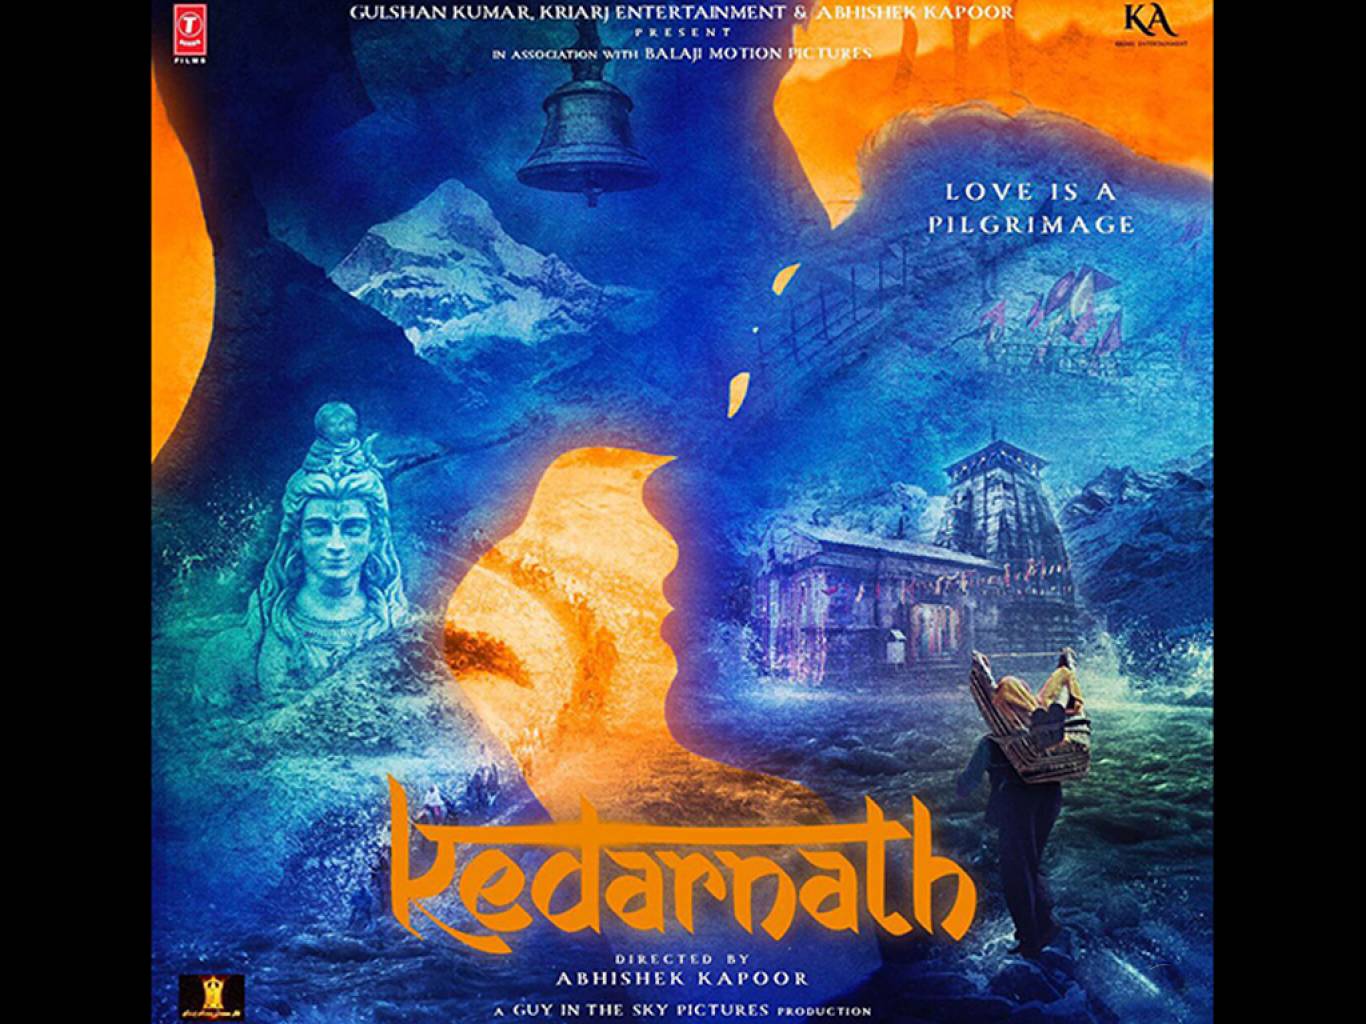 Kedarnath Movie HD Wallpaper. Kedarnath HD Movie Wallpaper Free